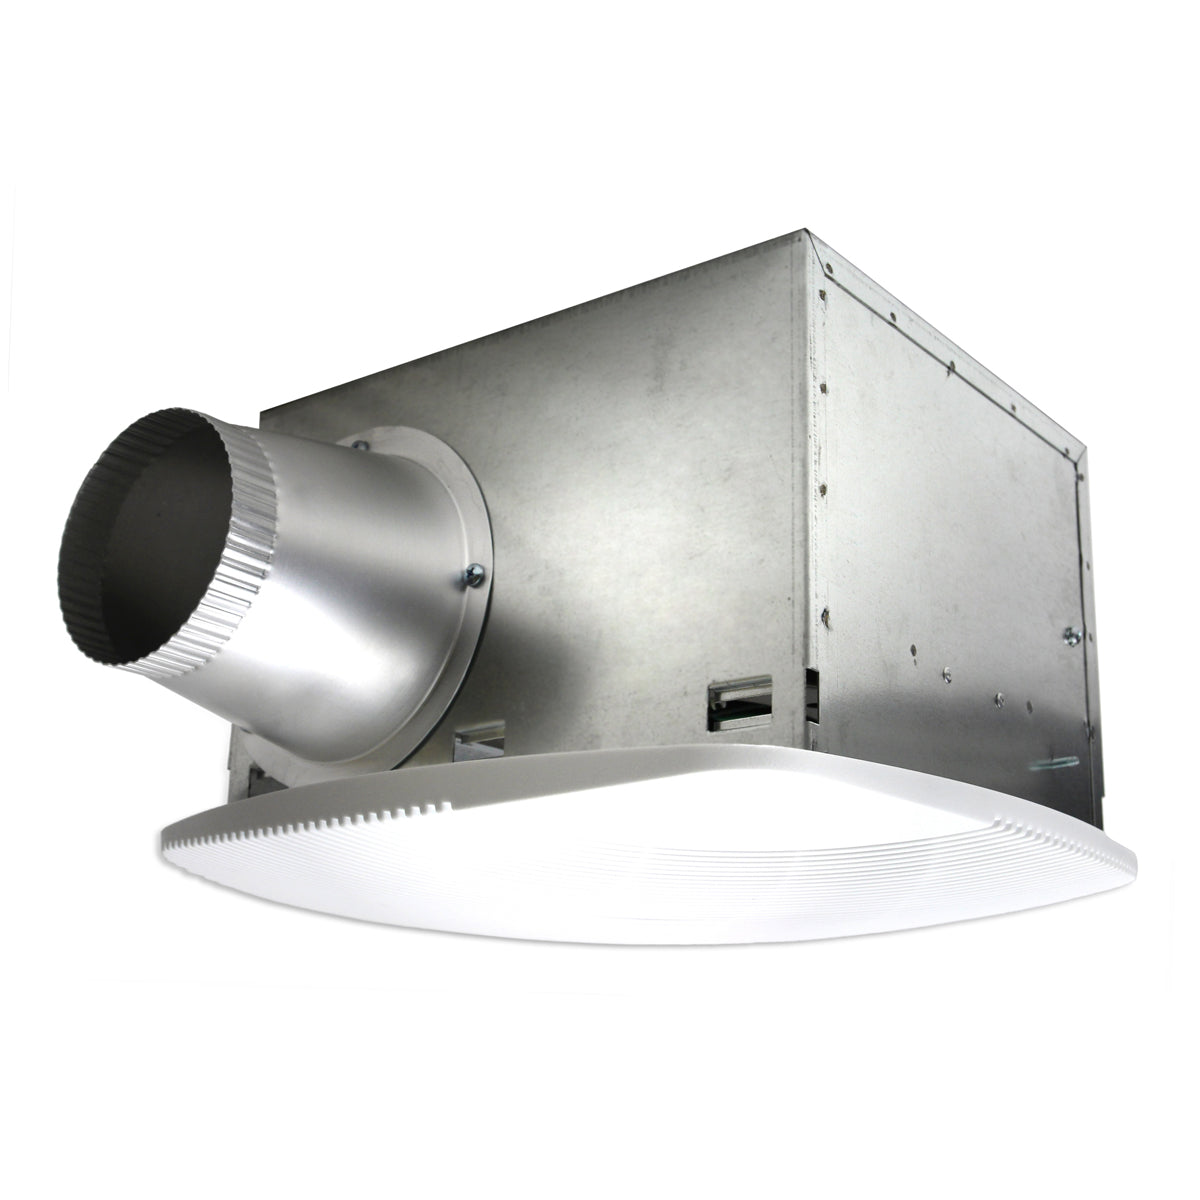 NuVent SH Series Standard Ceiling Exhaust Bath Fans